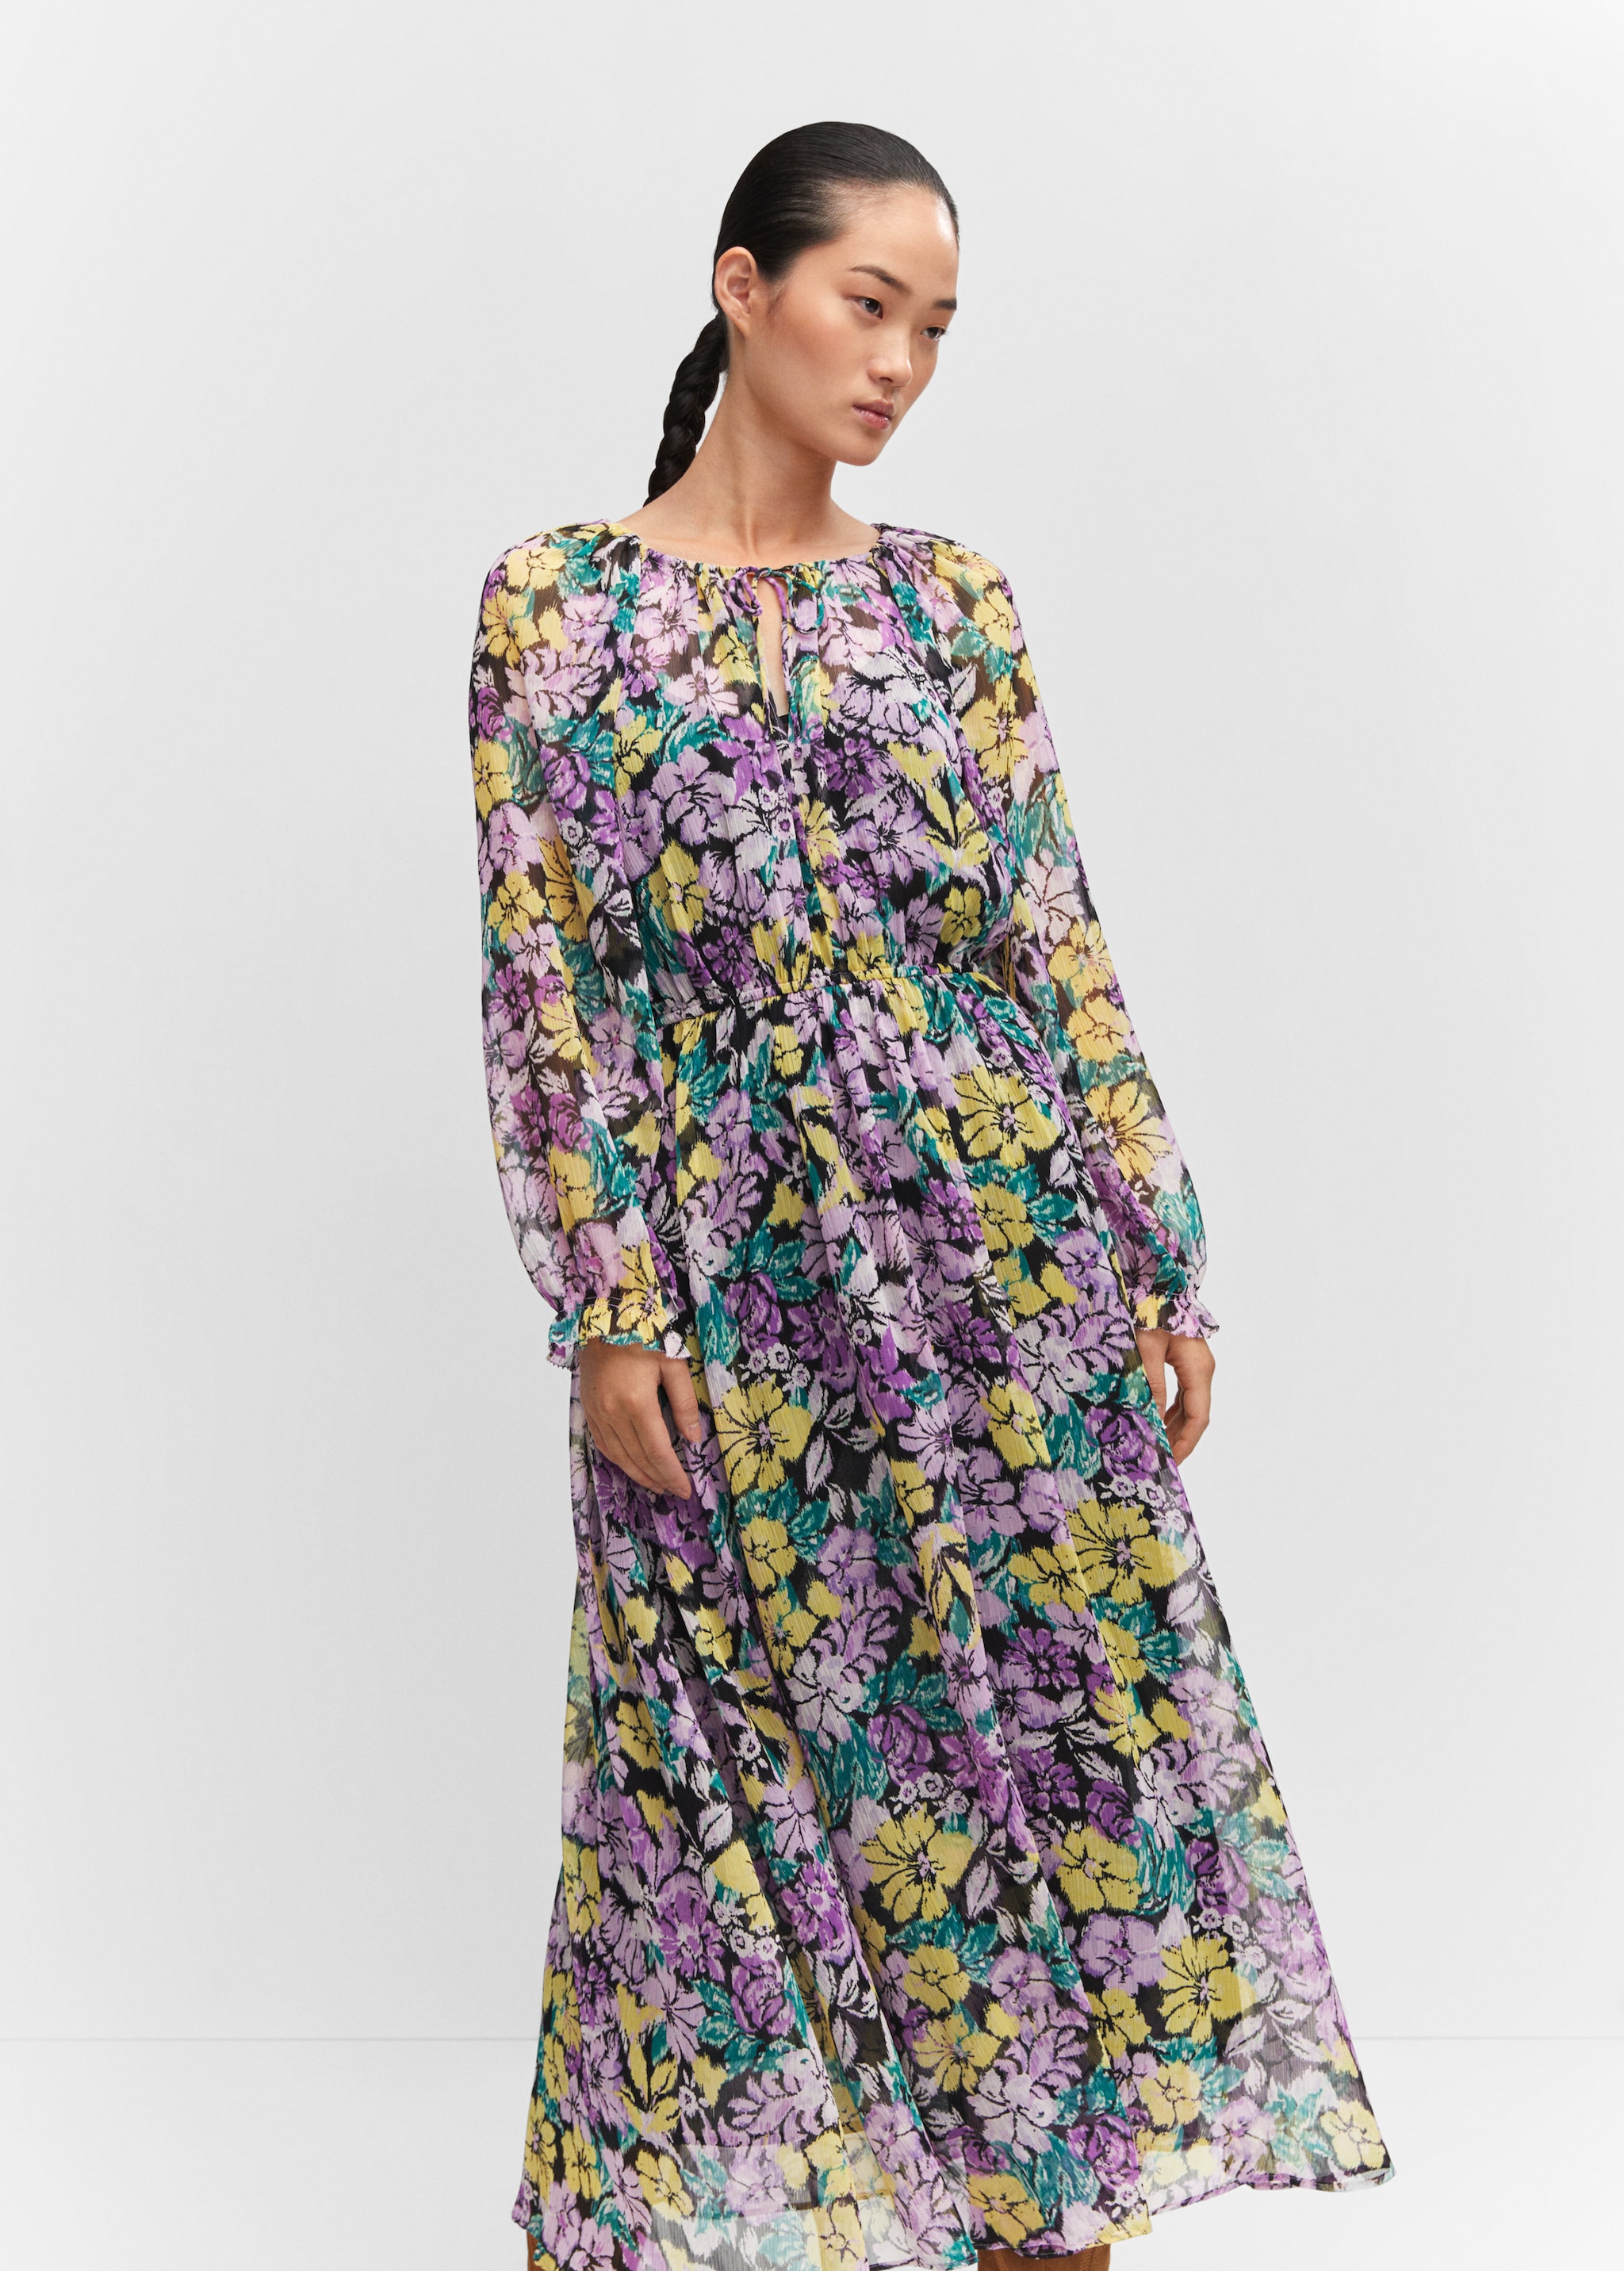 Textured floral-pattern dress - Medium plane